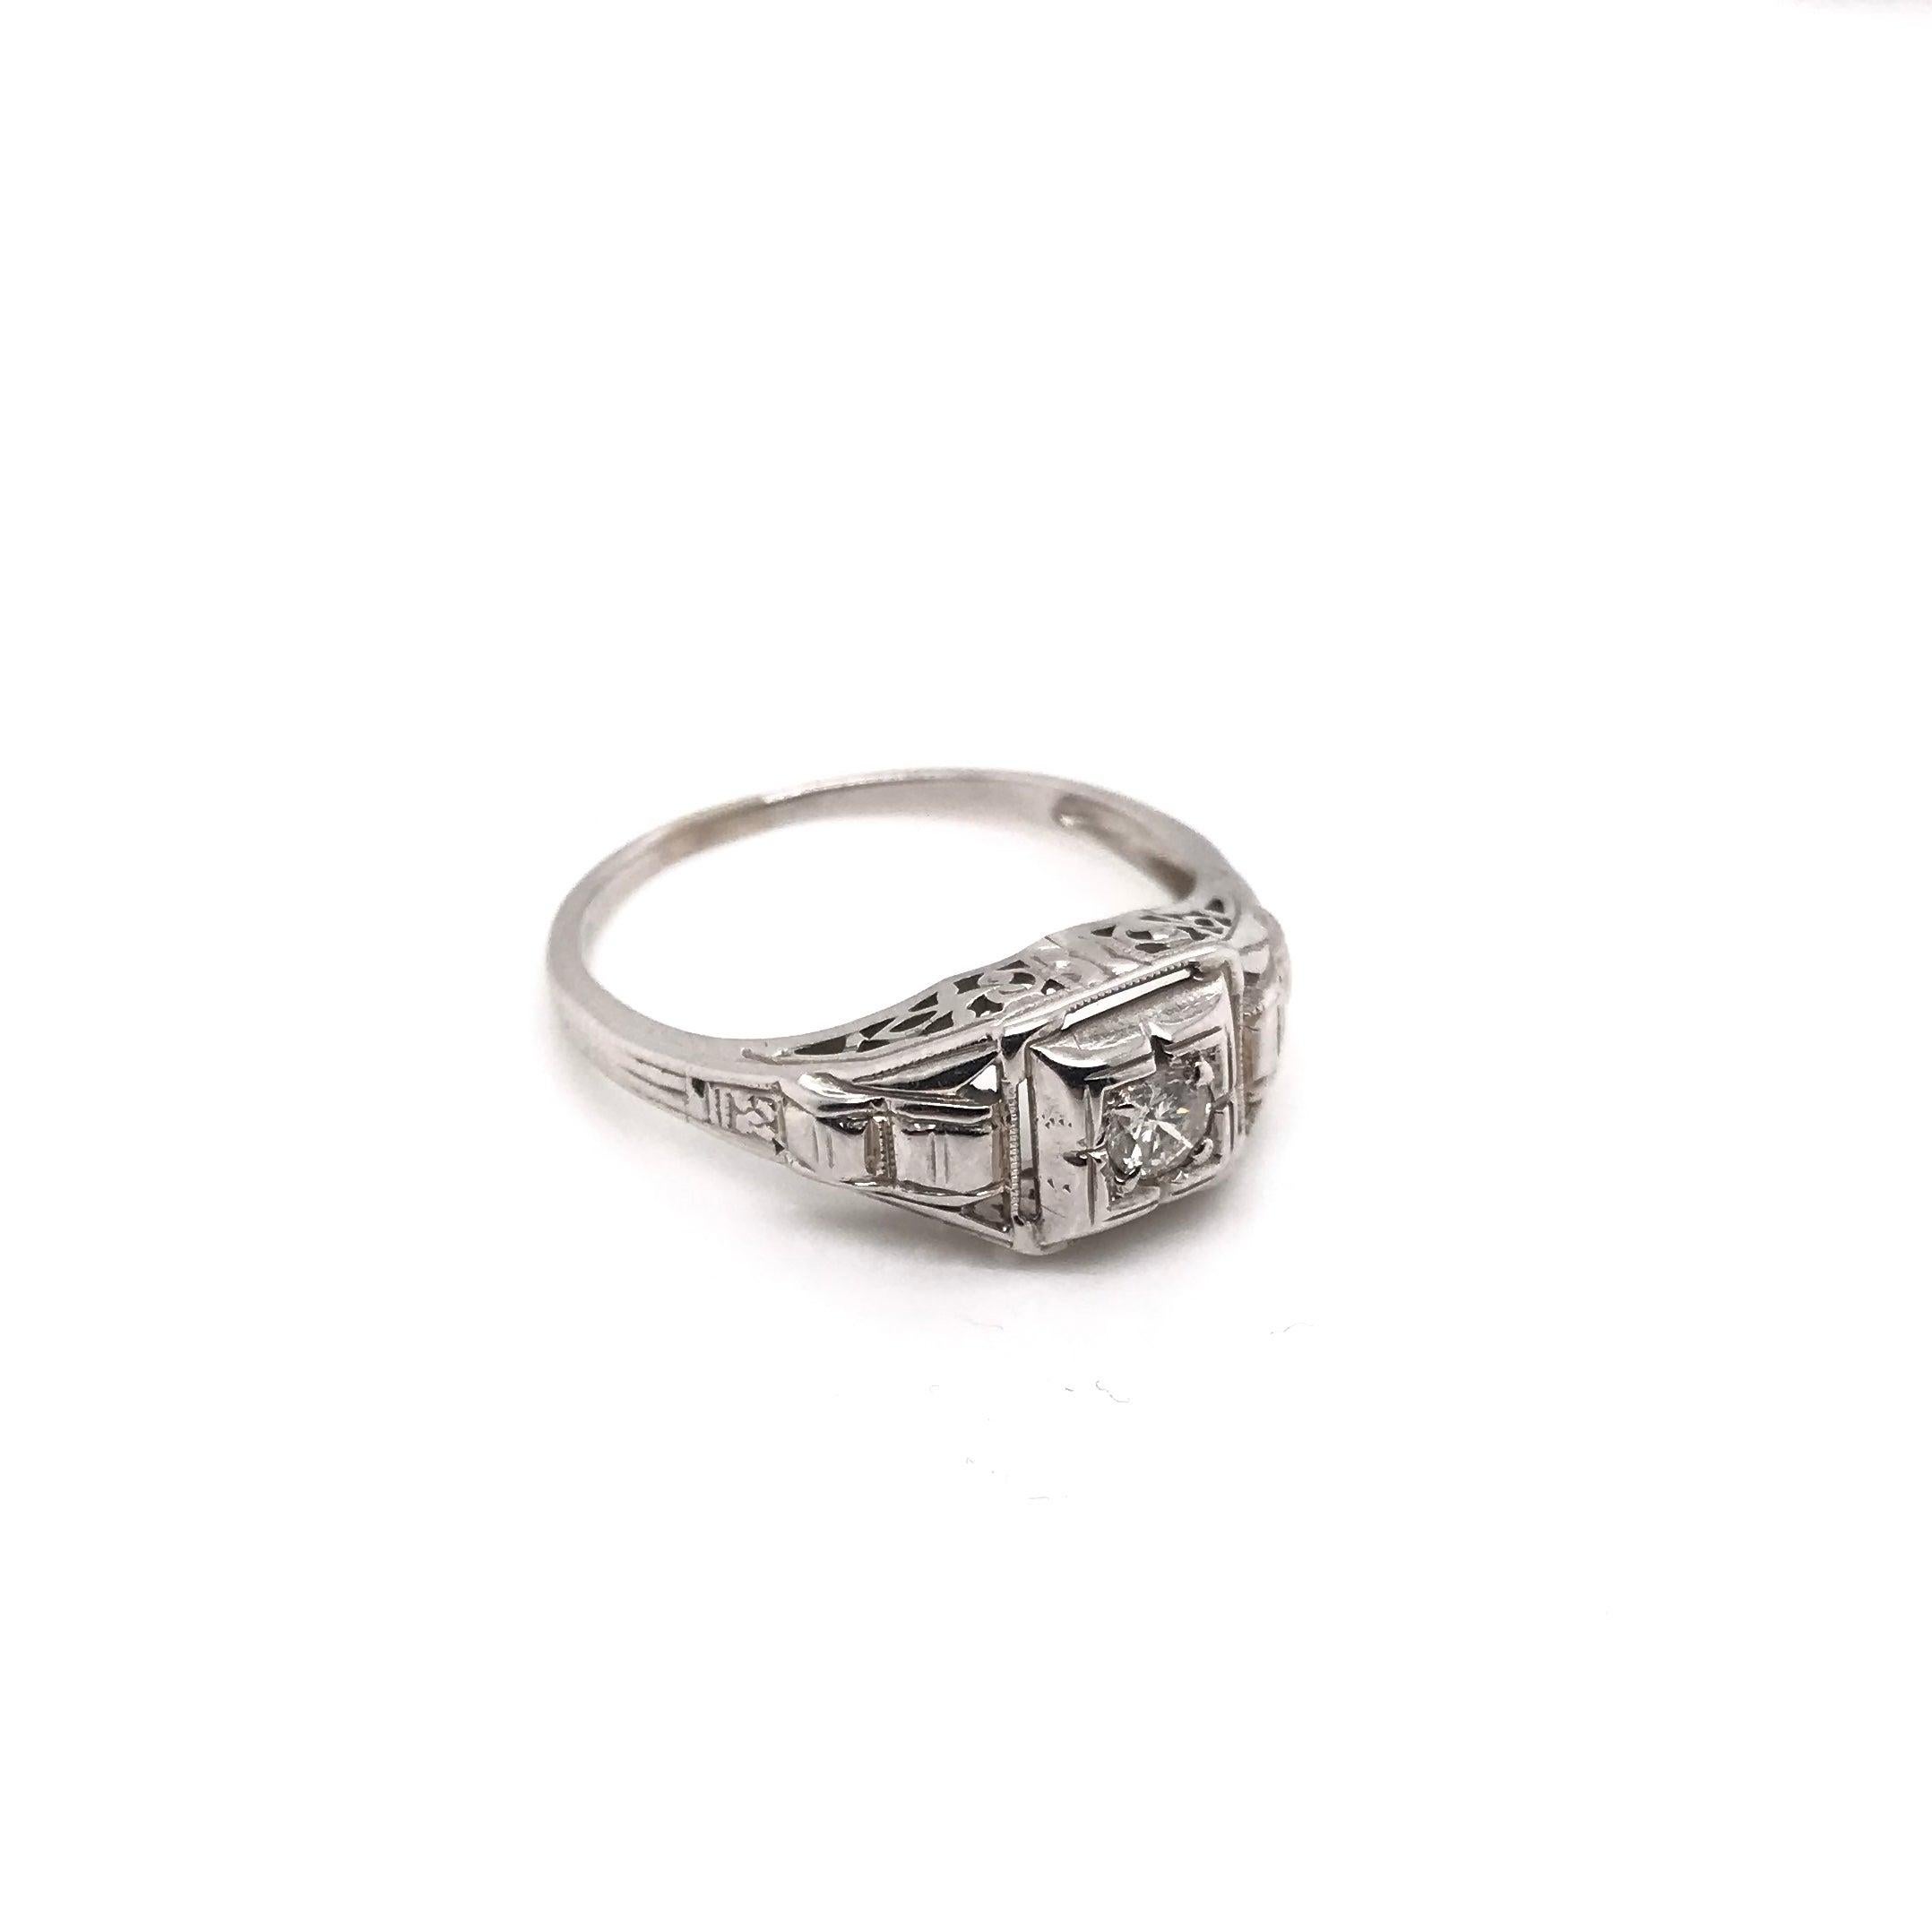 Art Deco Filigree Ring With Diamond Accent In Good Condition For Sale In Montgomery, AL